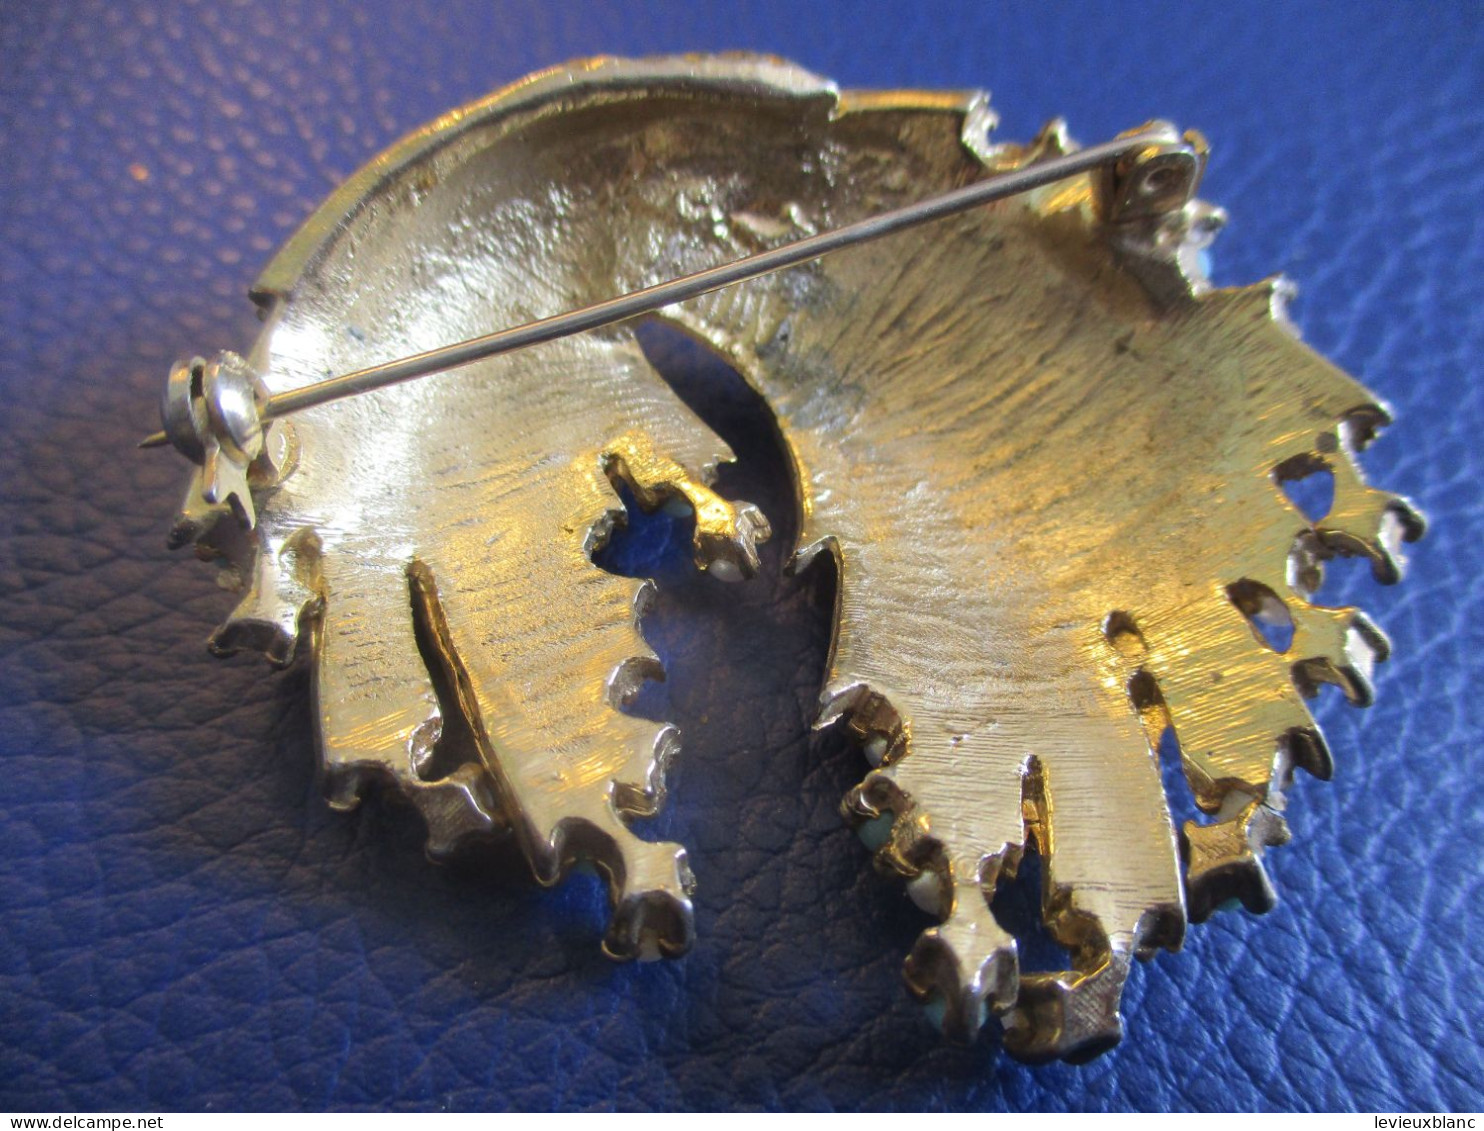 Broche fantaisie ancienne avec sertissage de mini Turquoises et Perles /  Vers 1950-1970         BIJ162